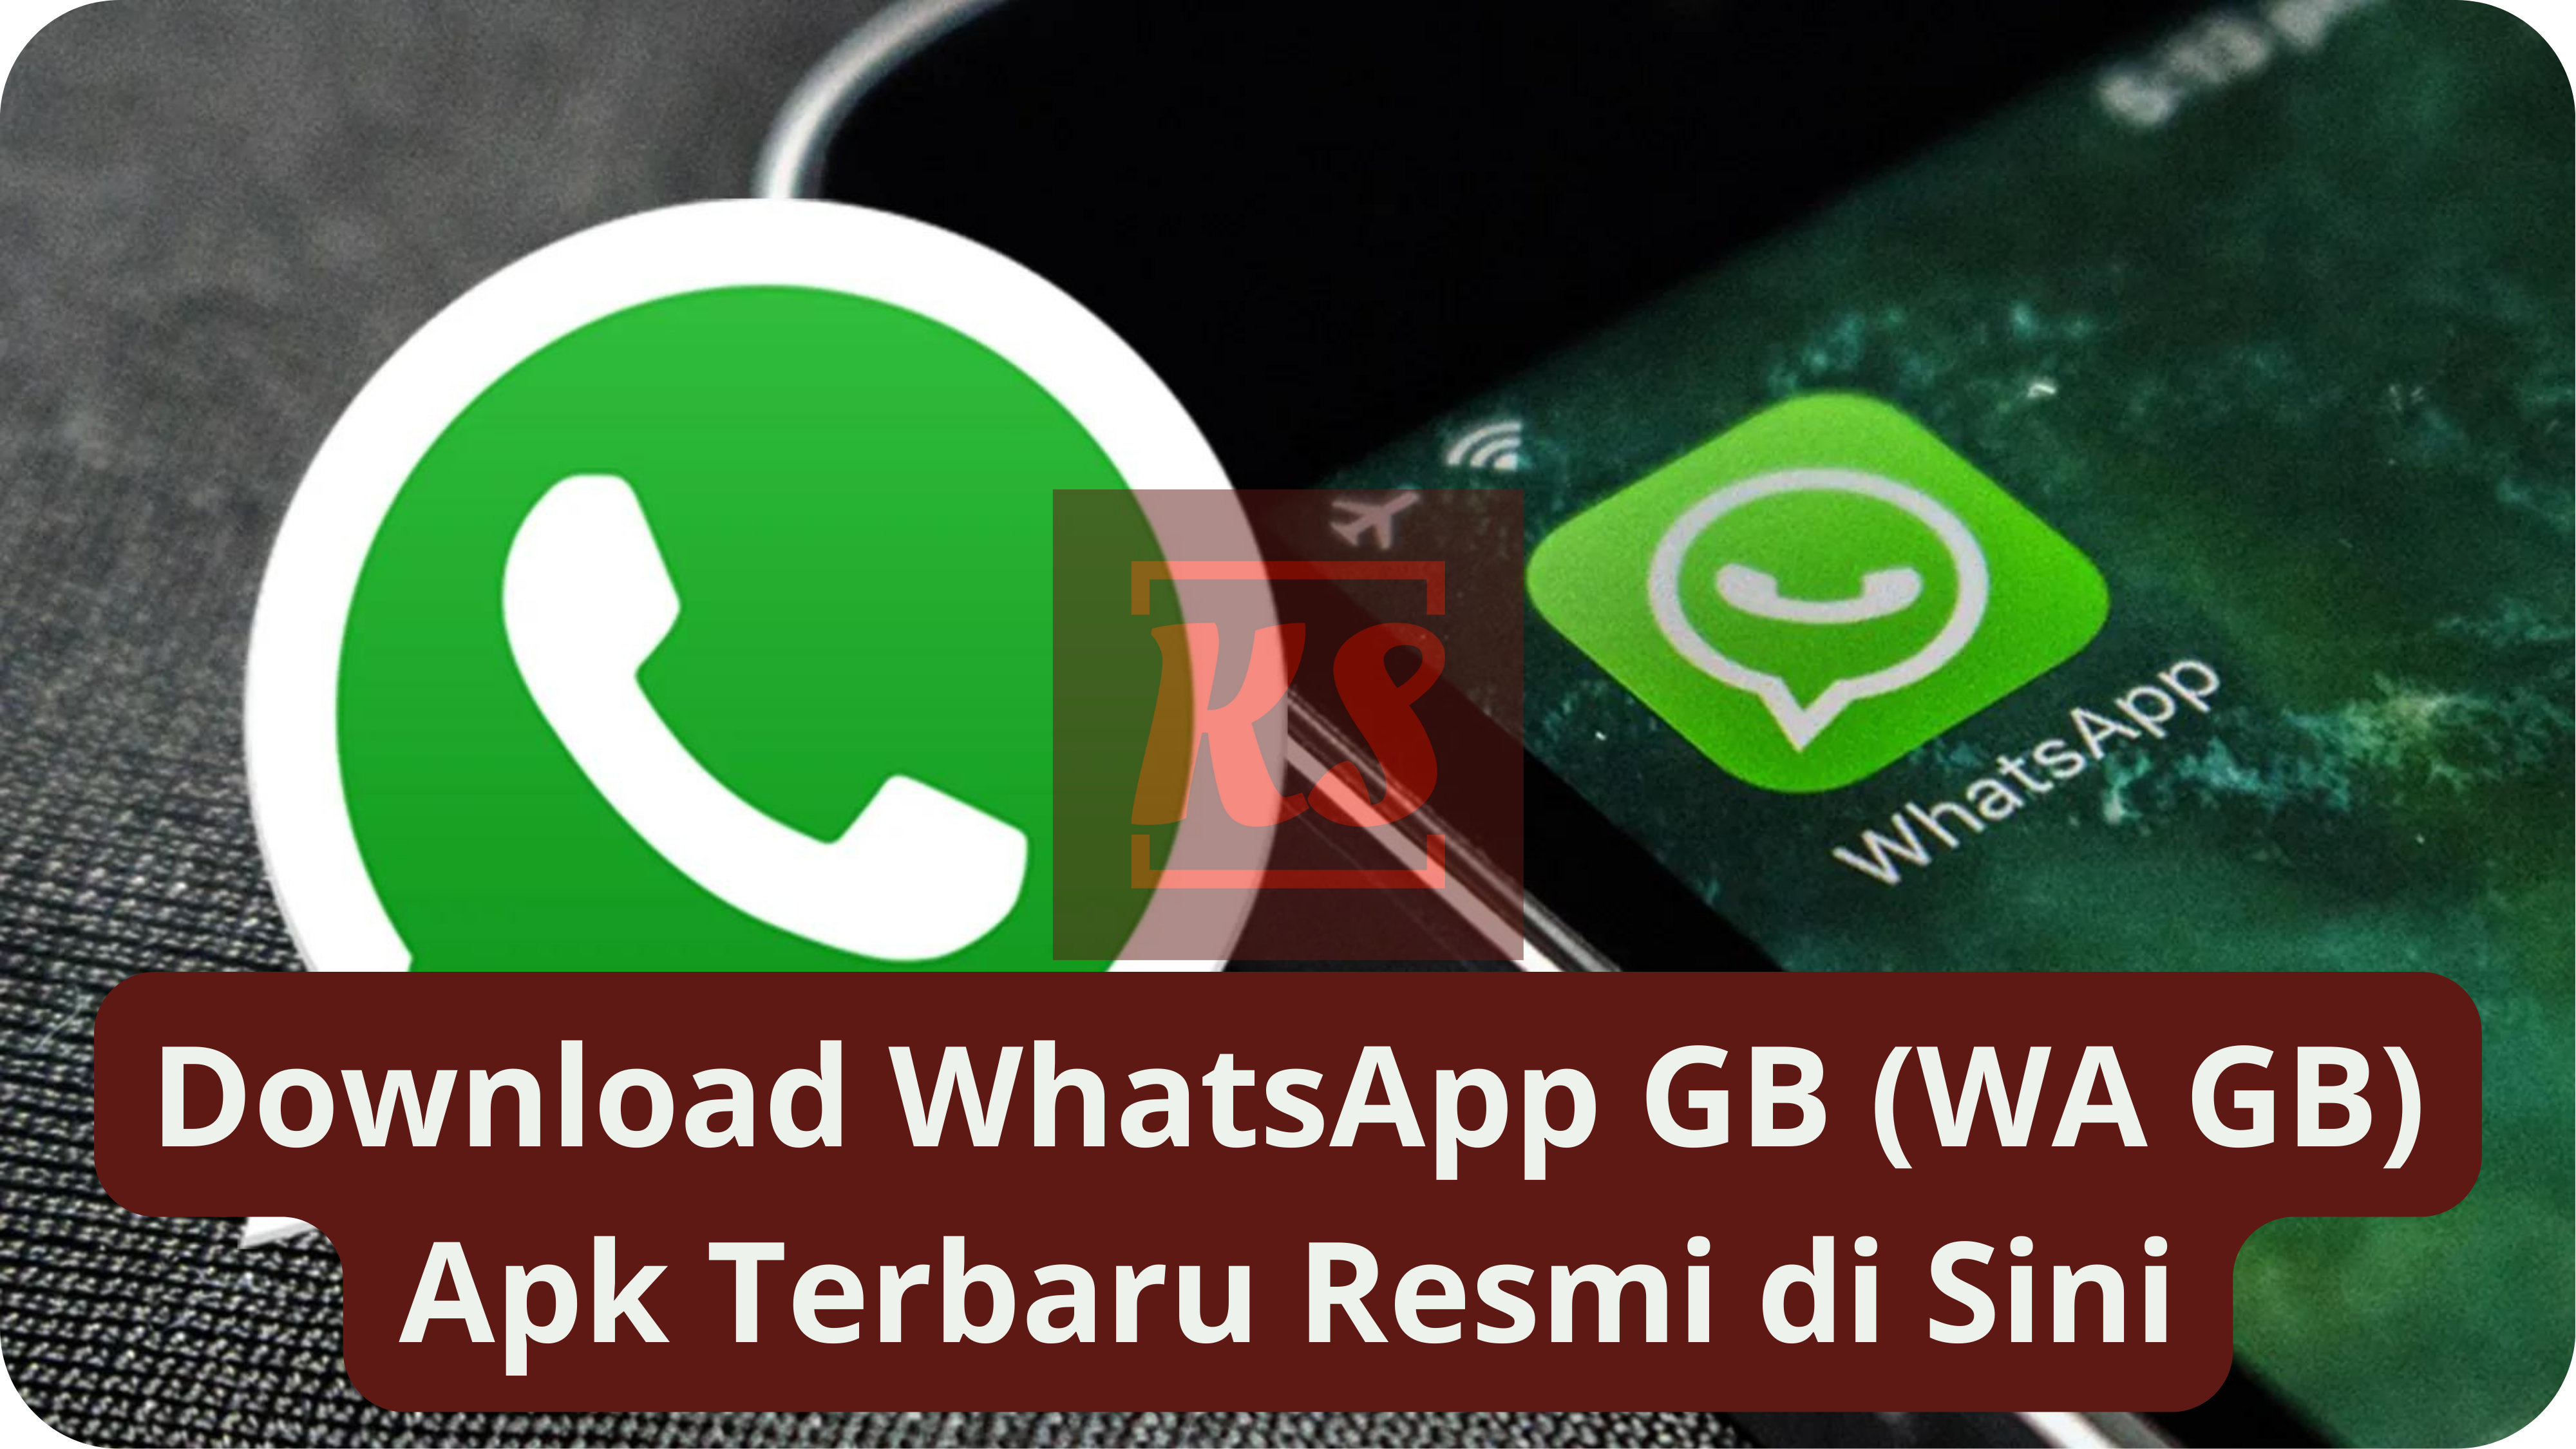 Download WhatsApp GB (WA GB) Apk Terbaru Resmi di Sini